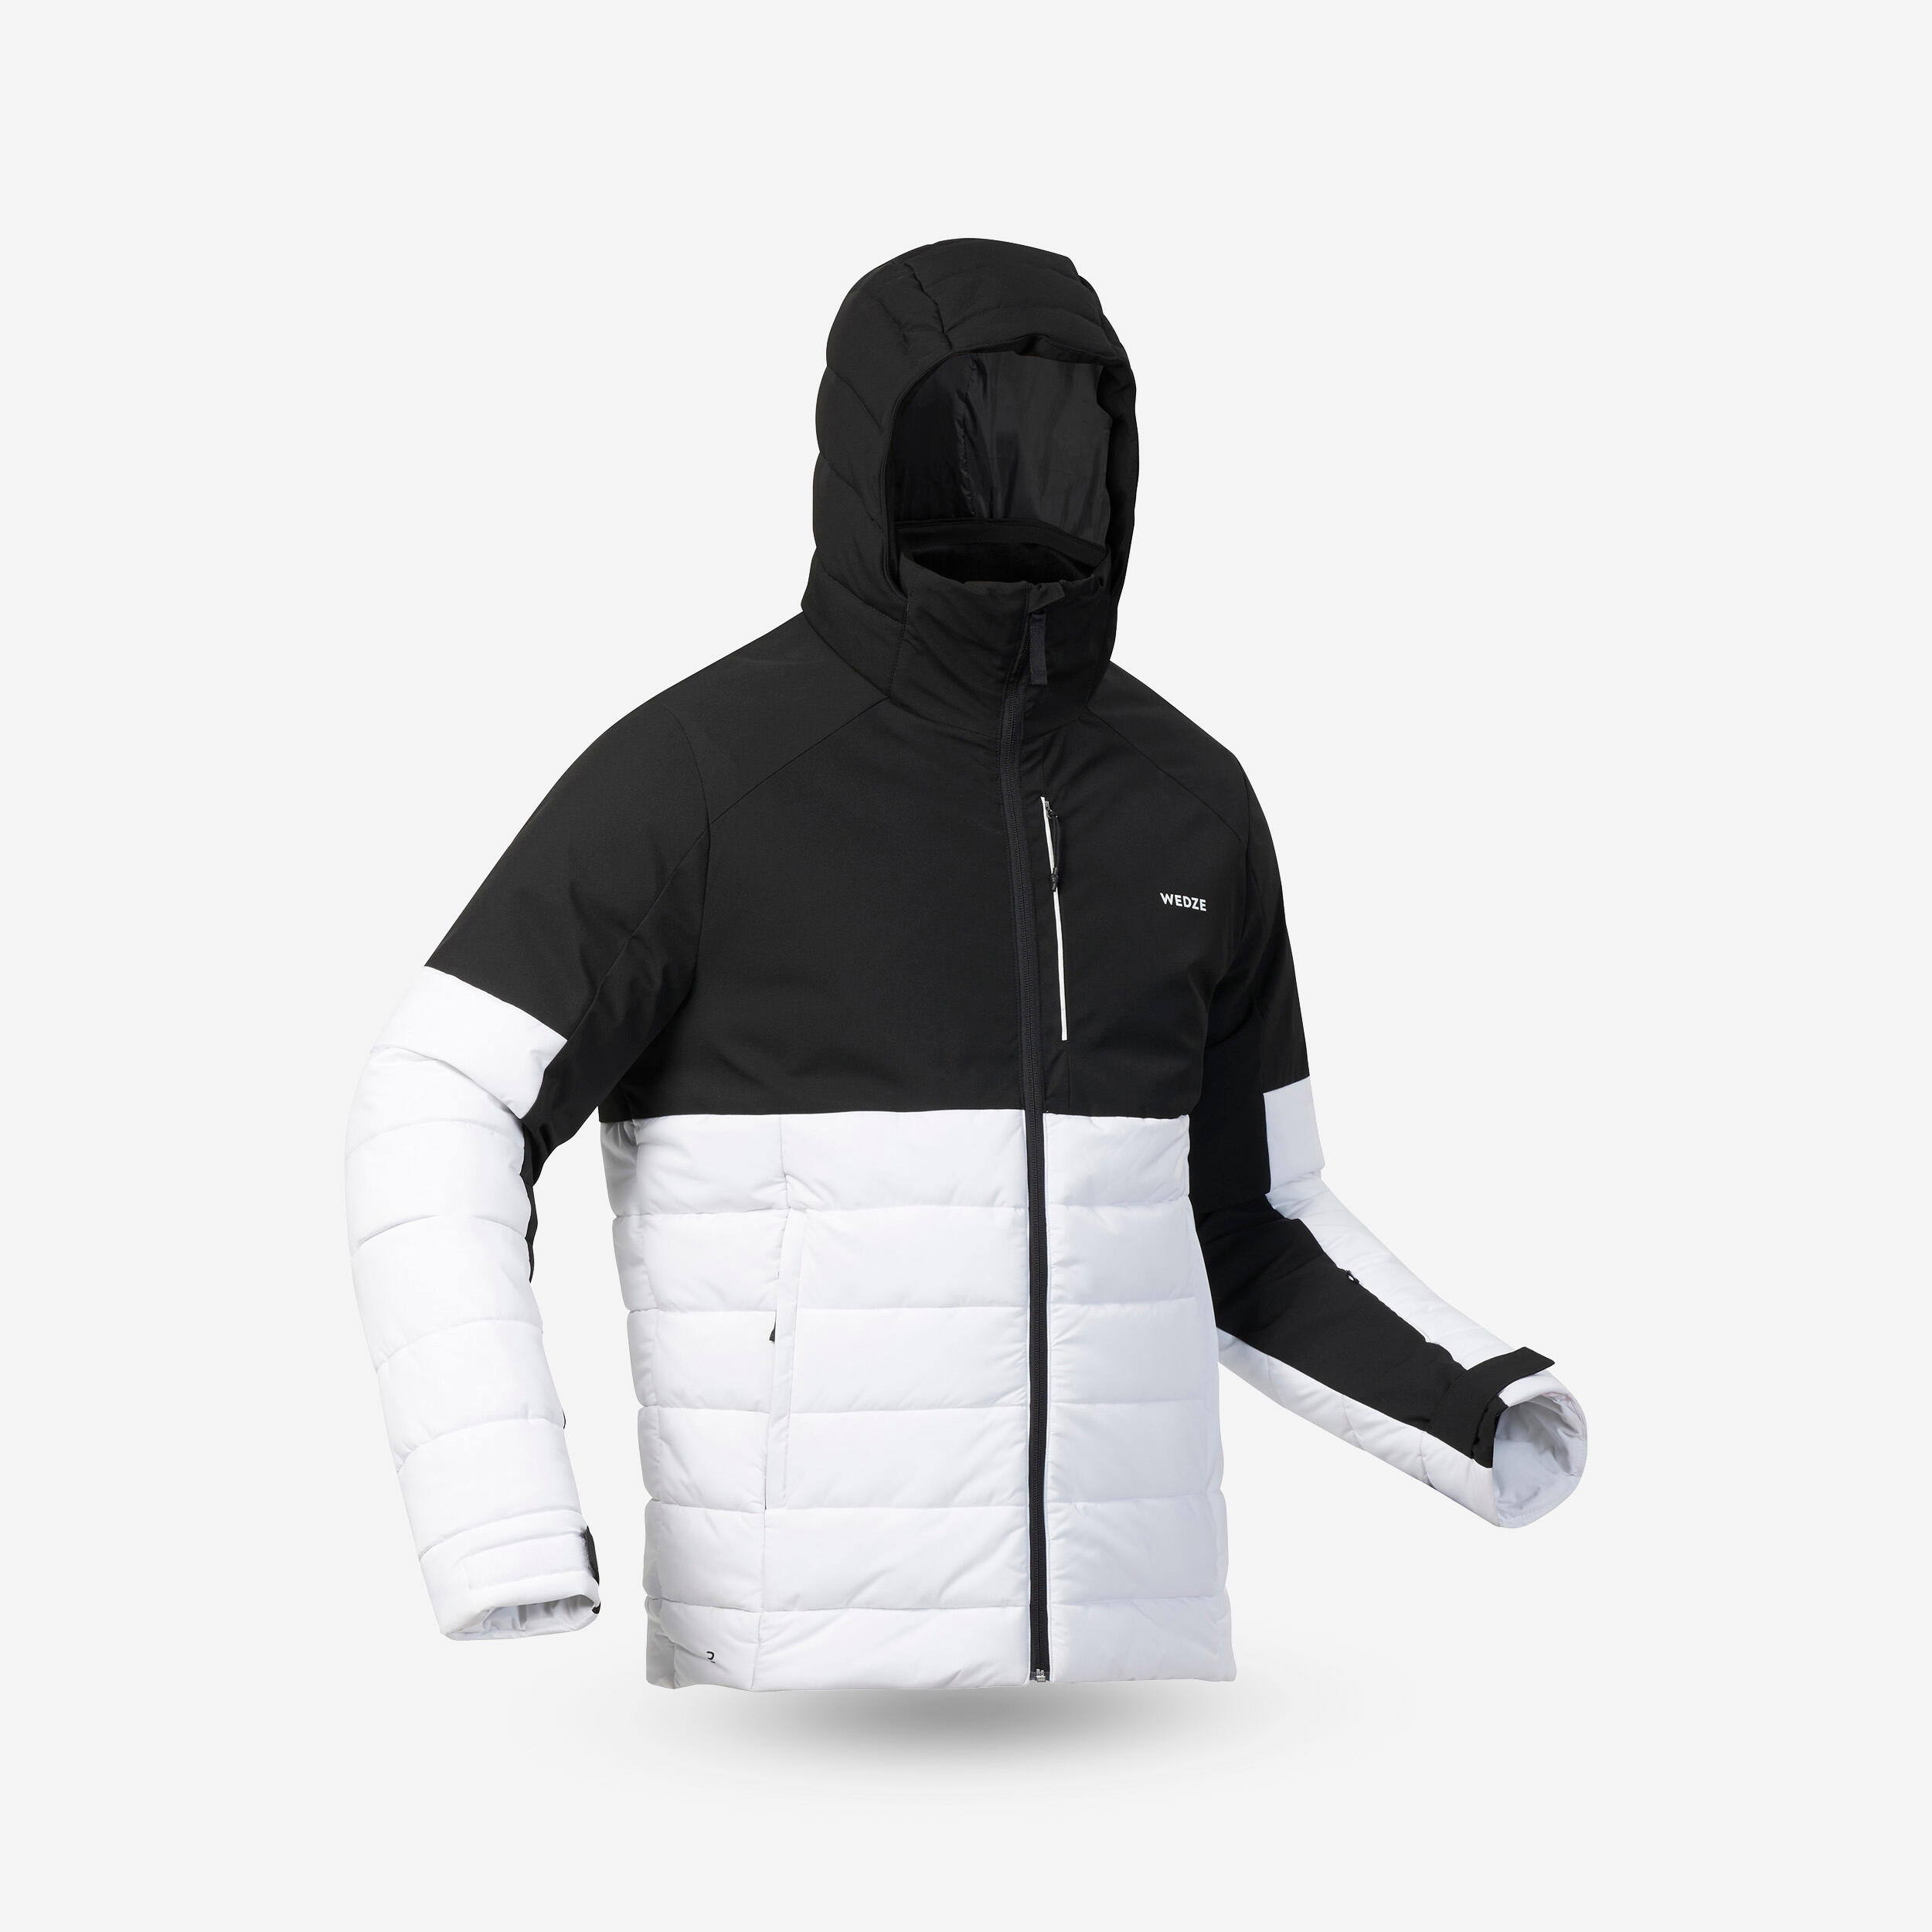 WEDZE Men’s warm ski and snowboard jacket 100 - white/black